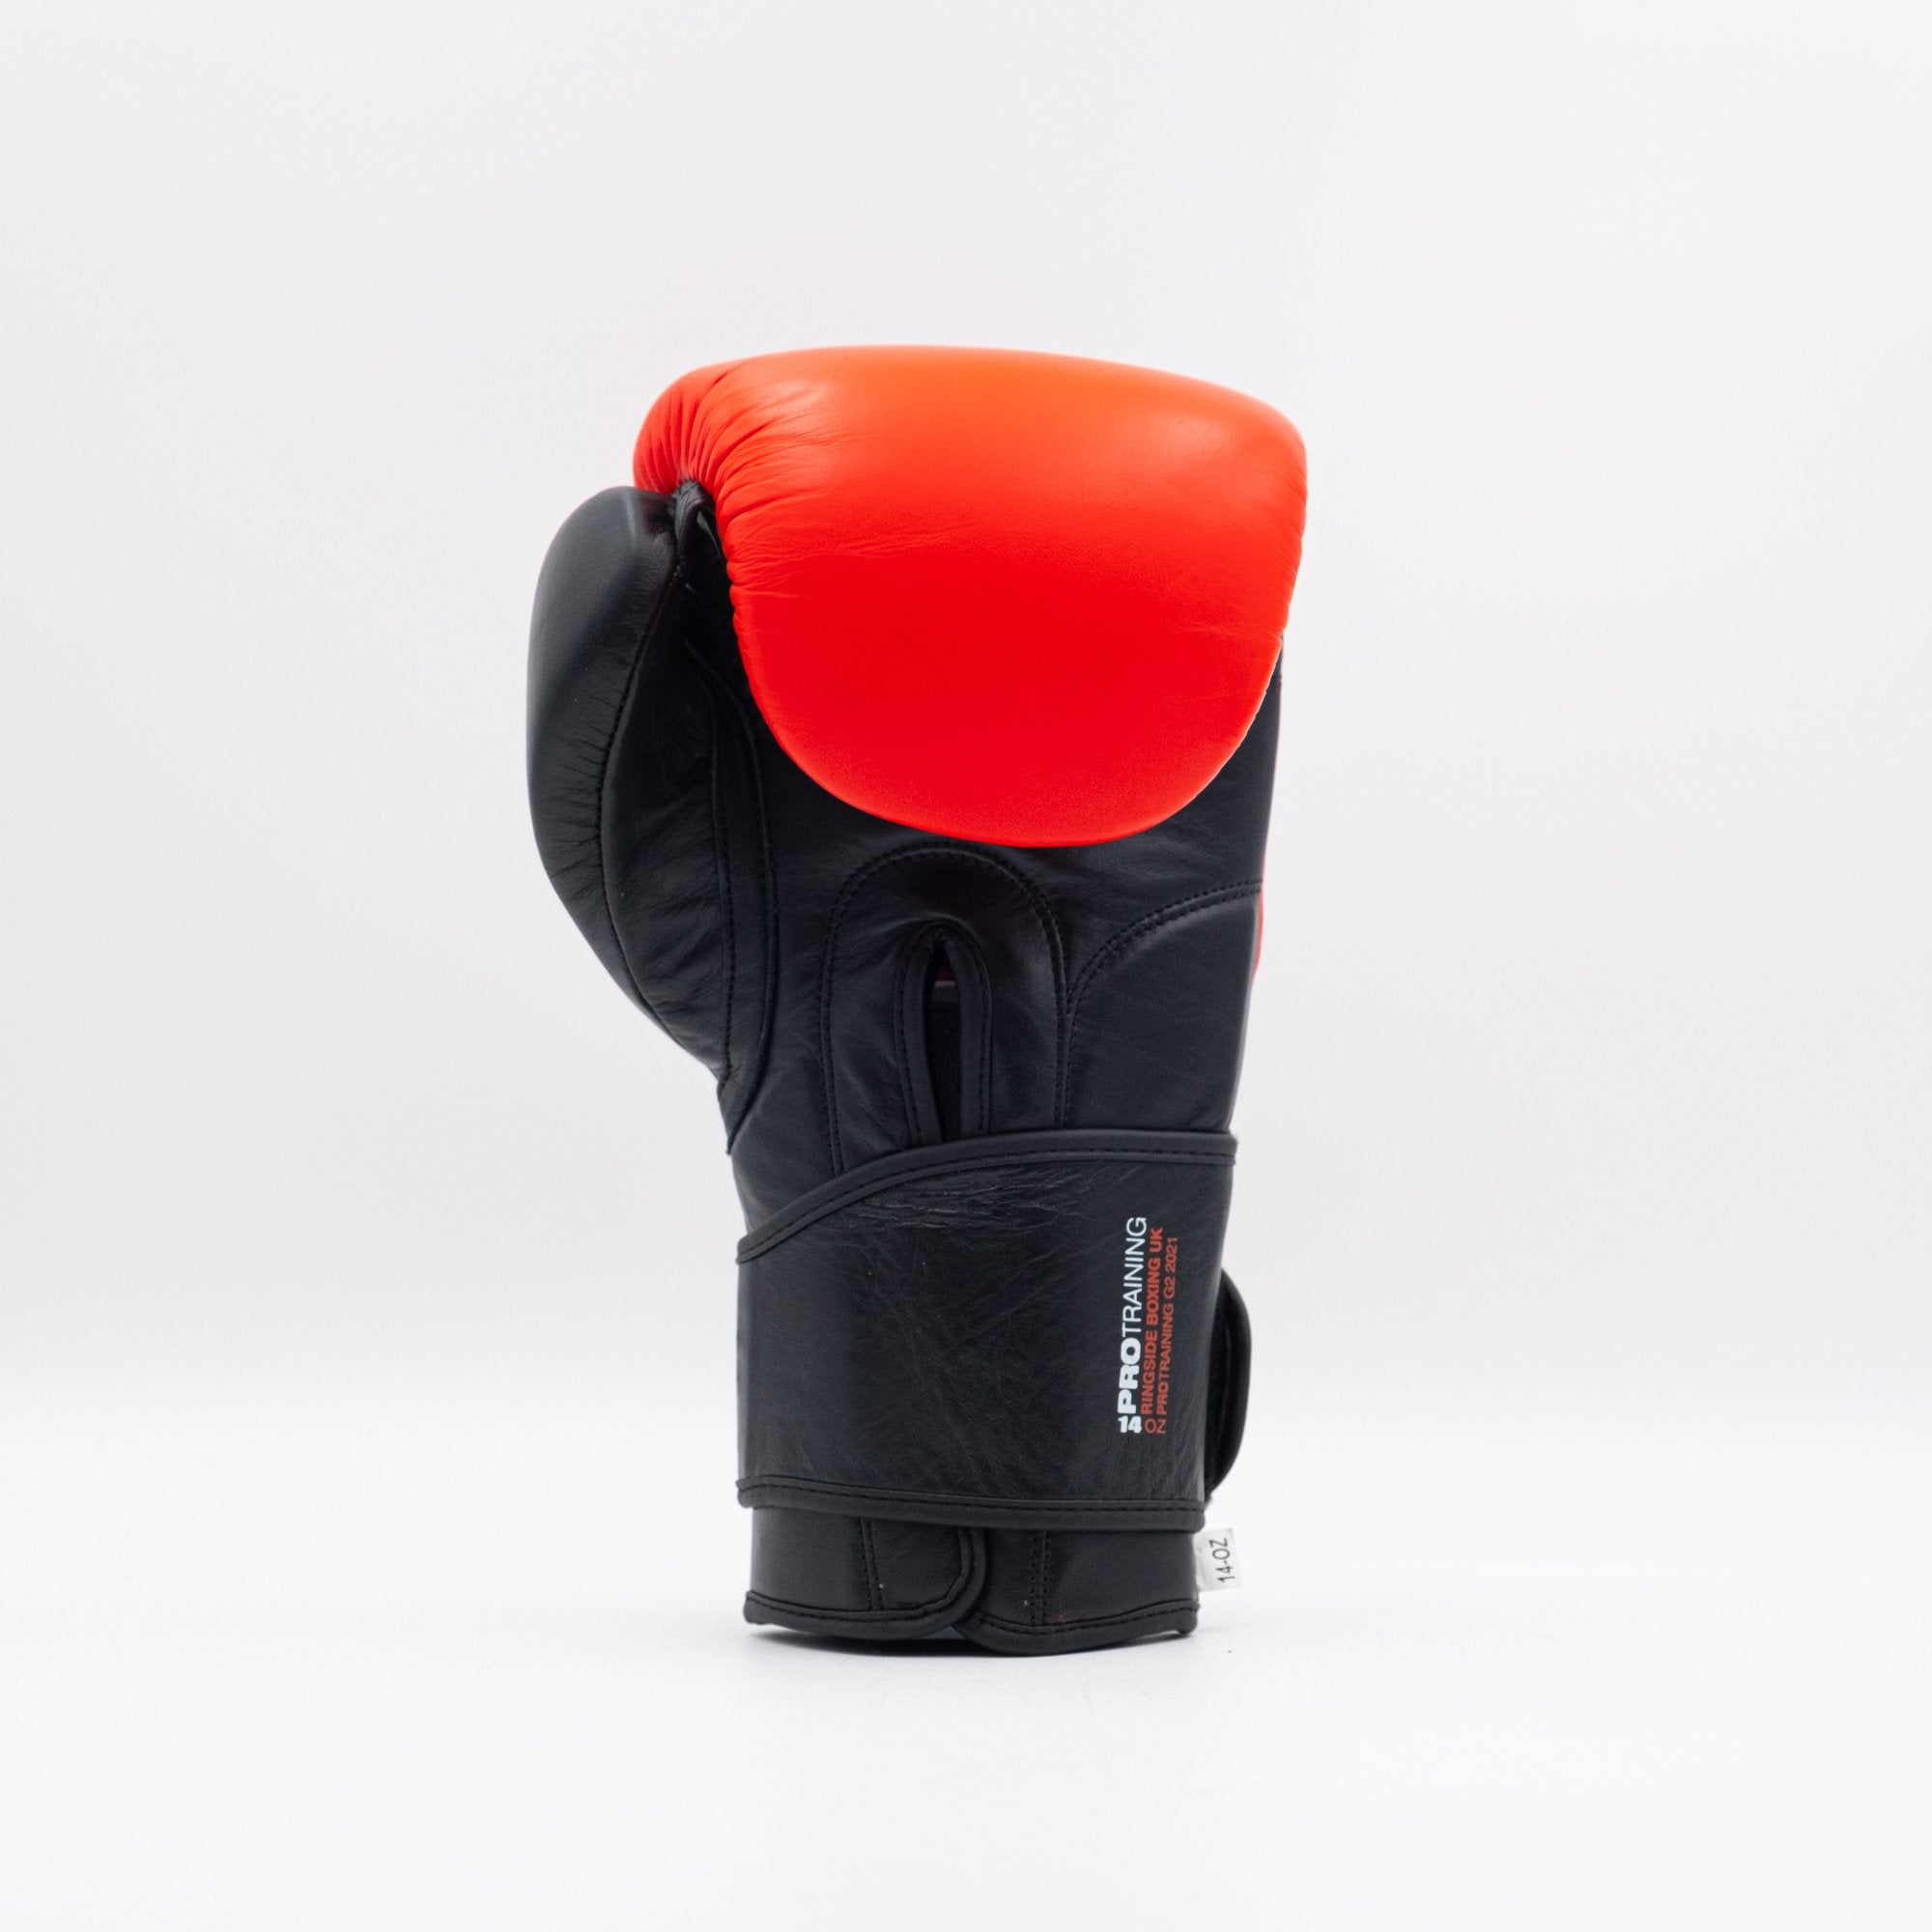 Pro Training G2 Strap Boxing Glove Red / Black / Slate